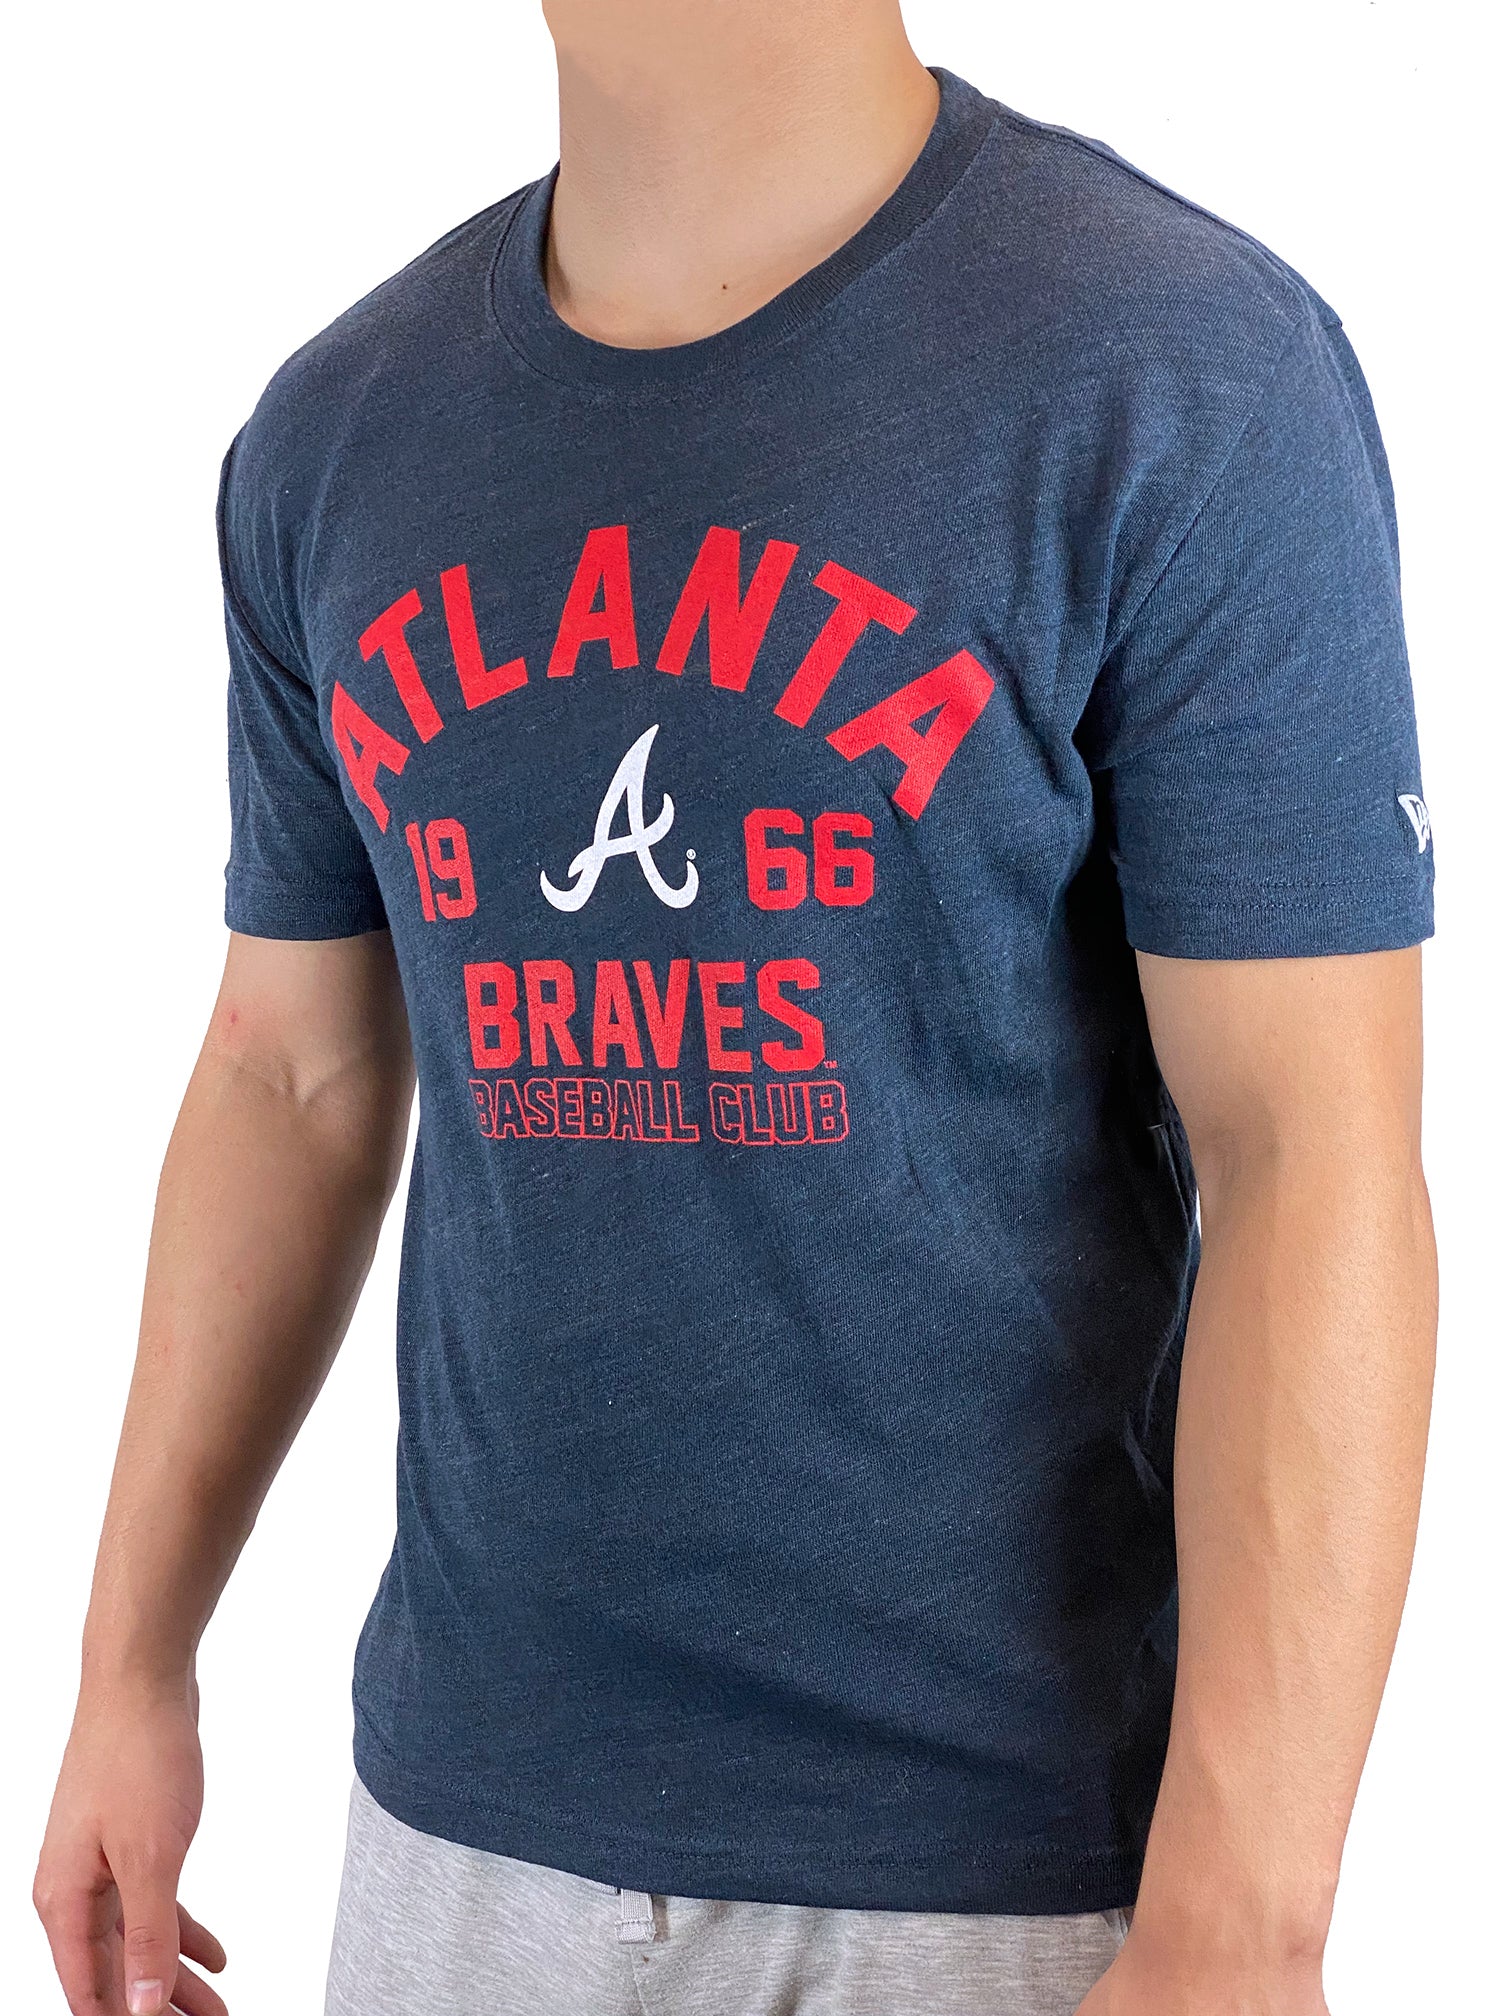 where can i buy atlanta braves shirts